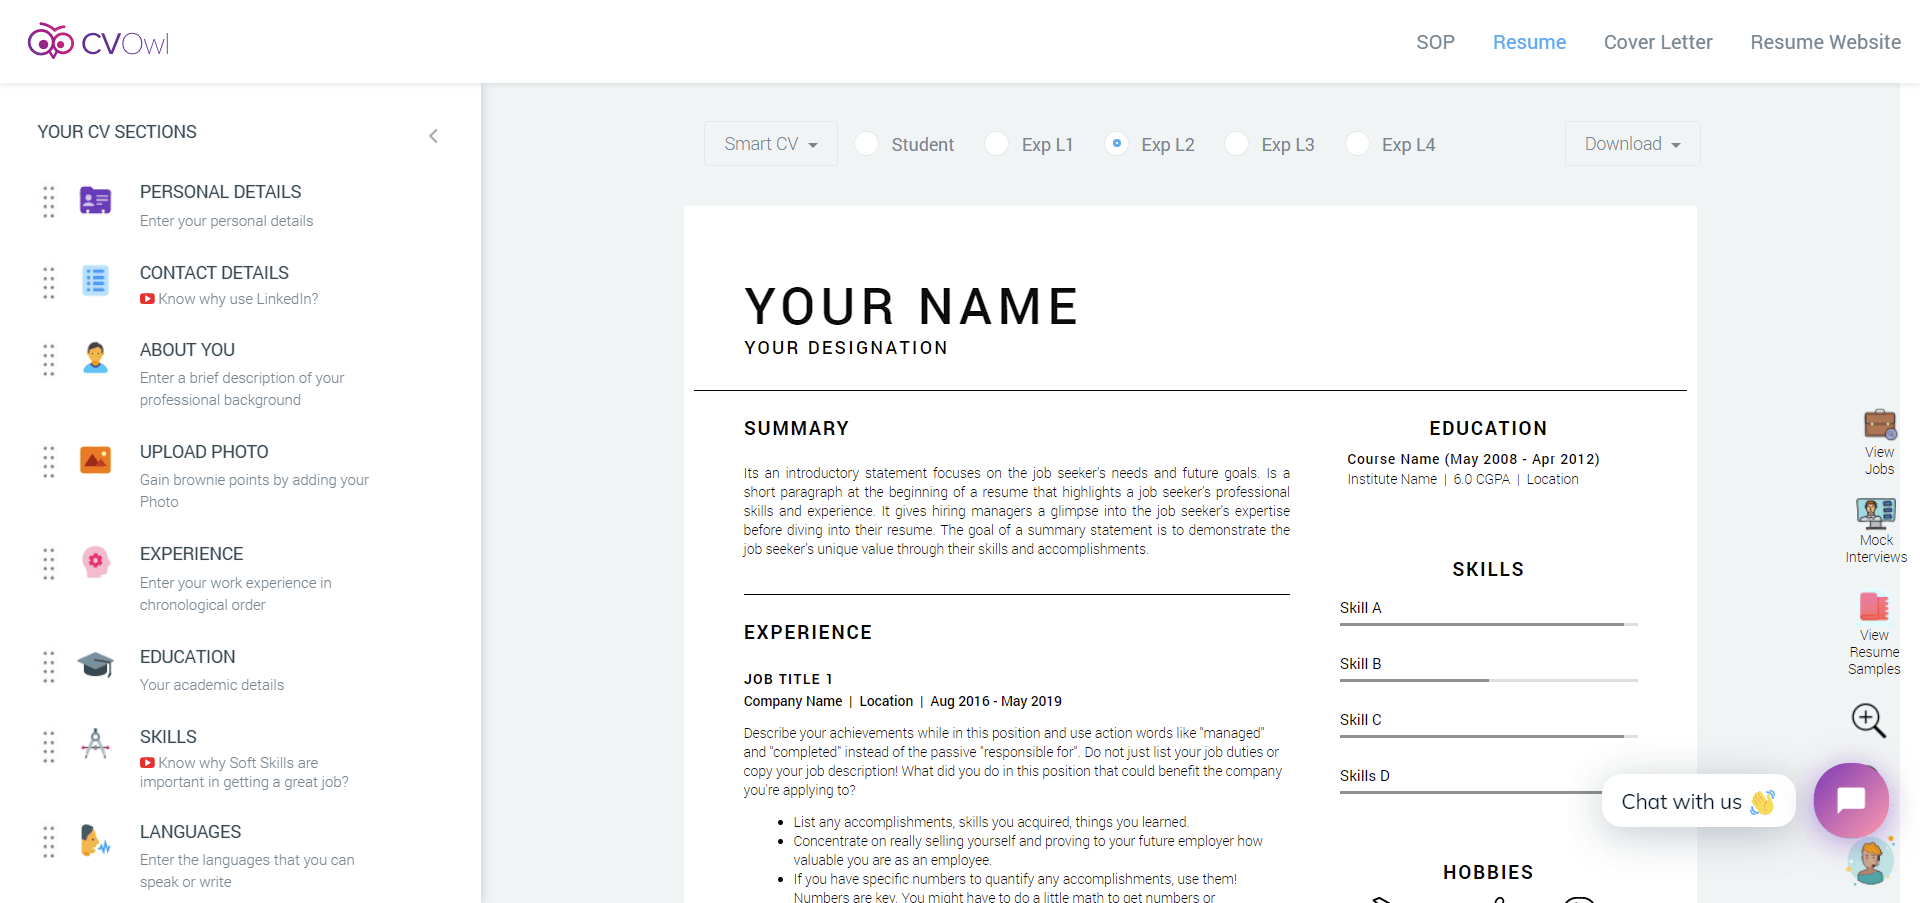 cvowl resume builder tool